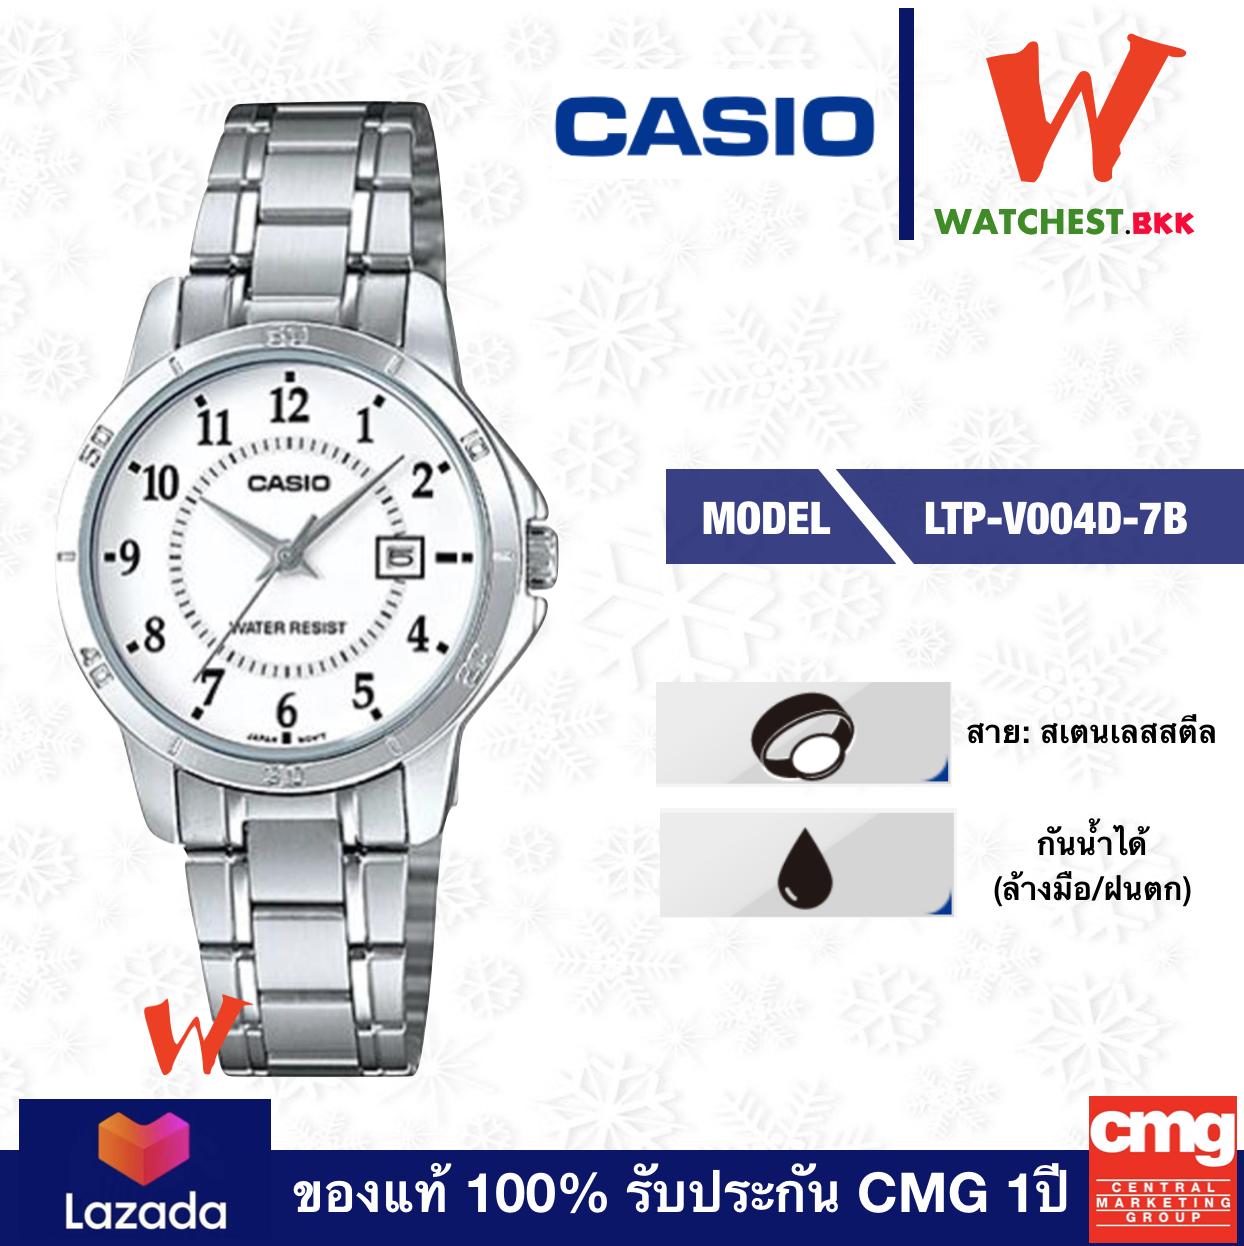 casio นาฬิกาข้อมือผู้หญิง สายสเตนเลส รุ่น LTP-V004D-7B คาสิโอ้ สายเหล็ก ตัวล็อกบานพับ (watchestbkk คาสิโอ แท้ ของแท้100% ประกัน CMG)